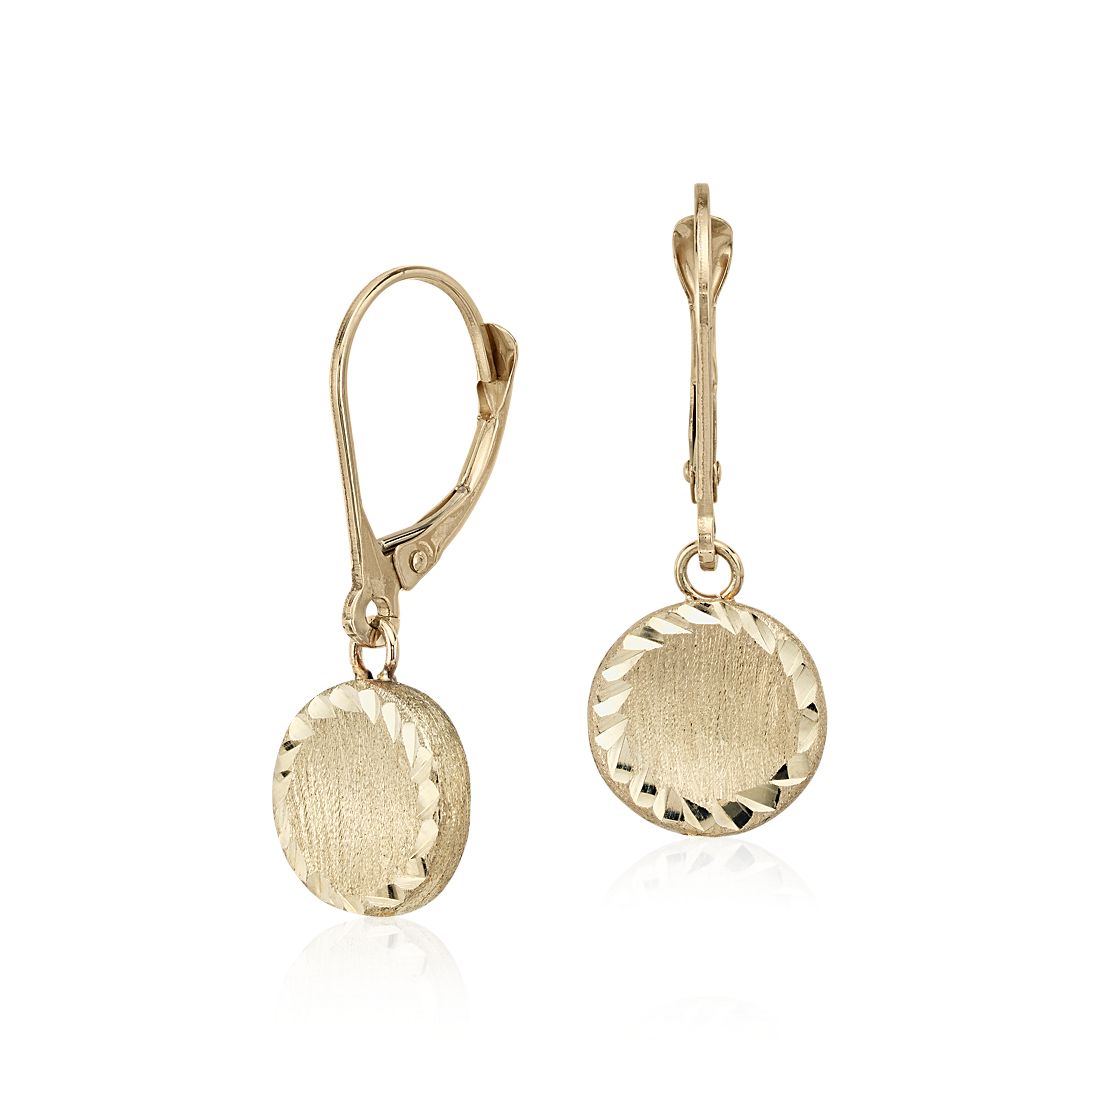 Round Drop Earrings in 14k Italian Yellow Gold